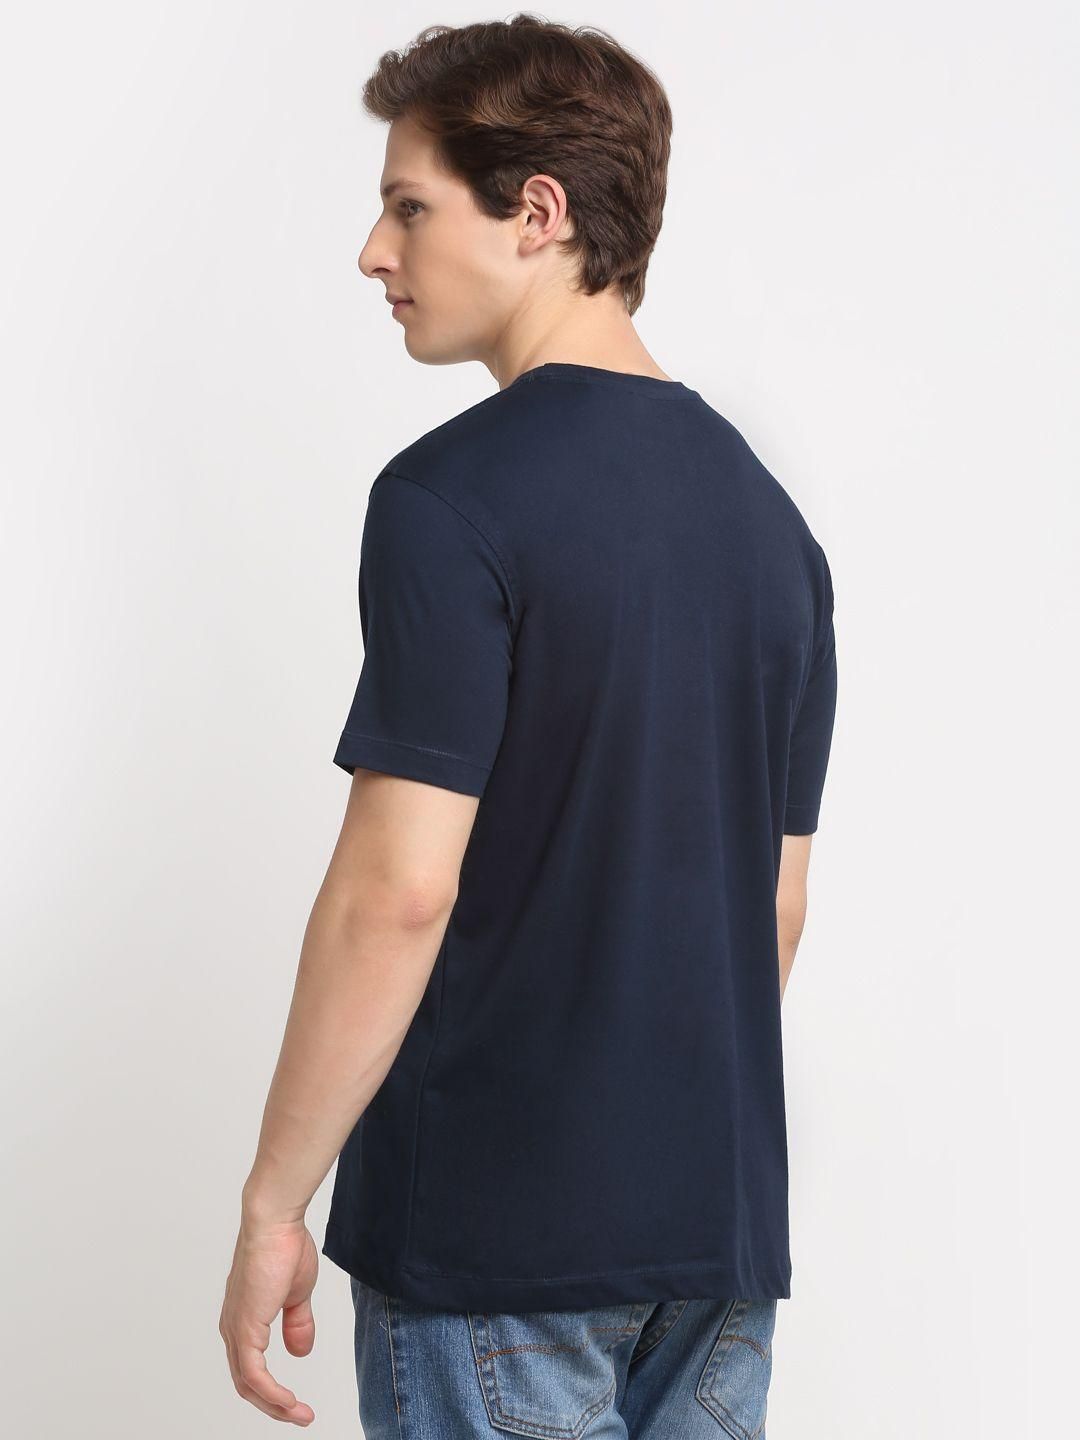 Cotton Printed Half Sleeves Round Neck Mens T-Shirt